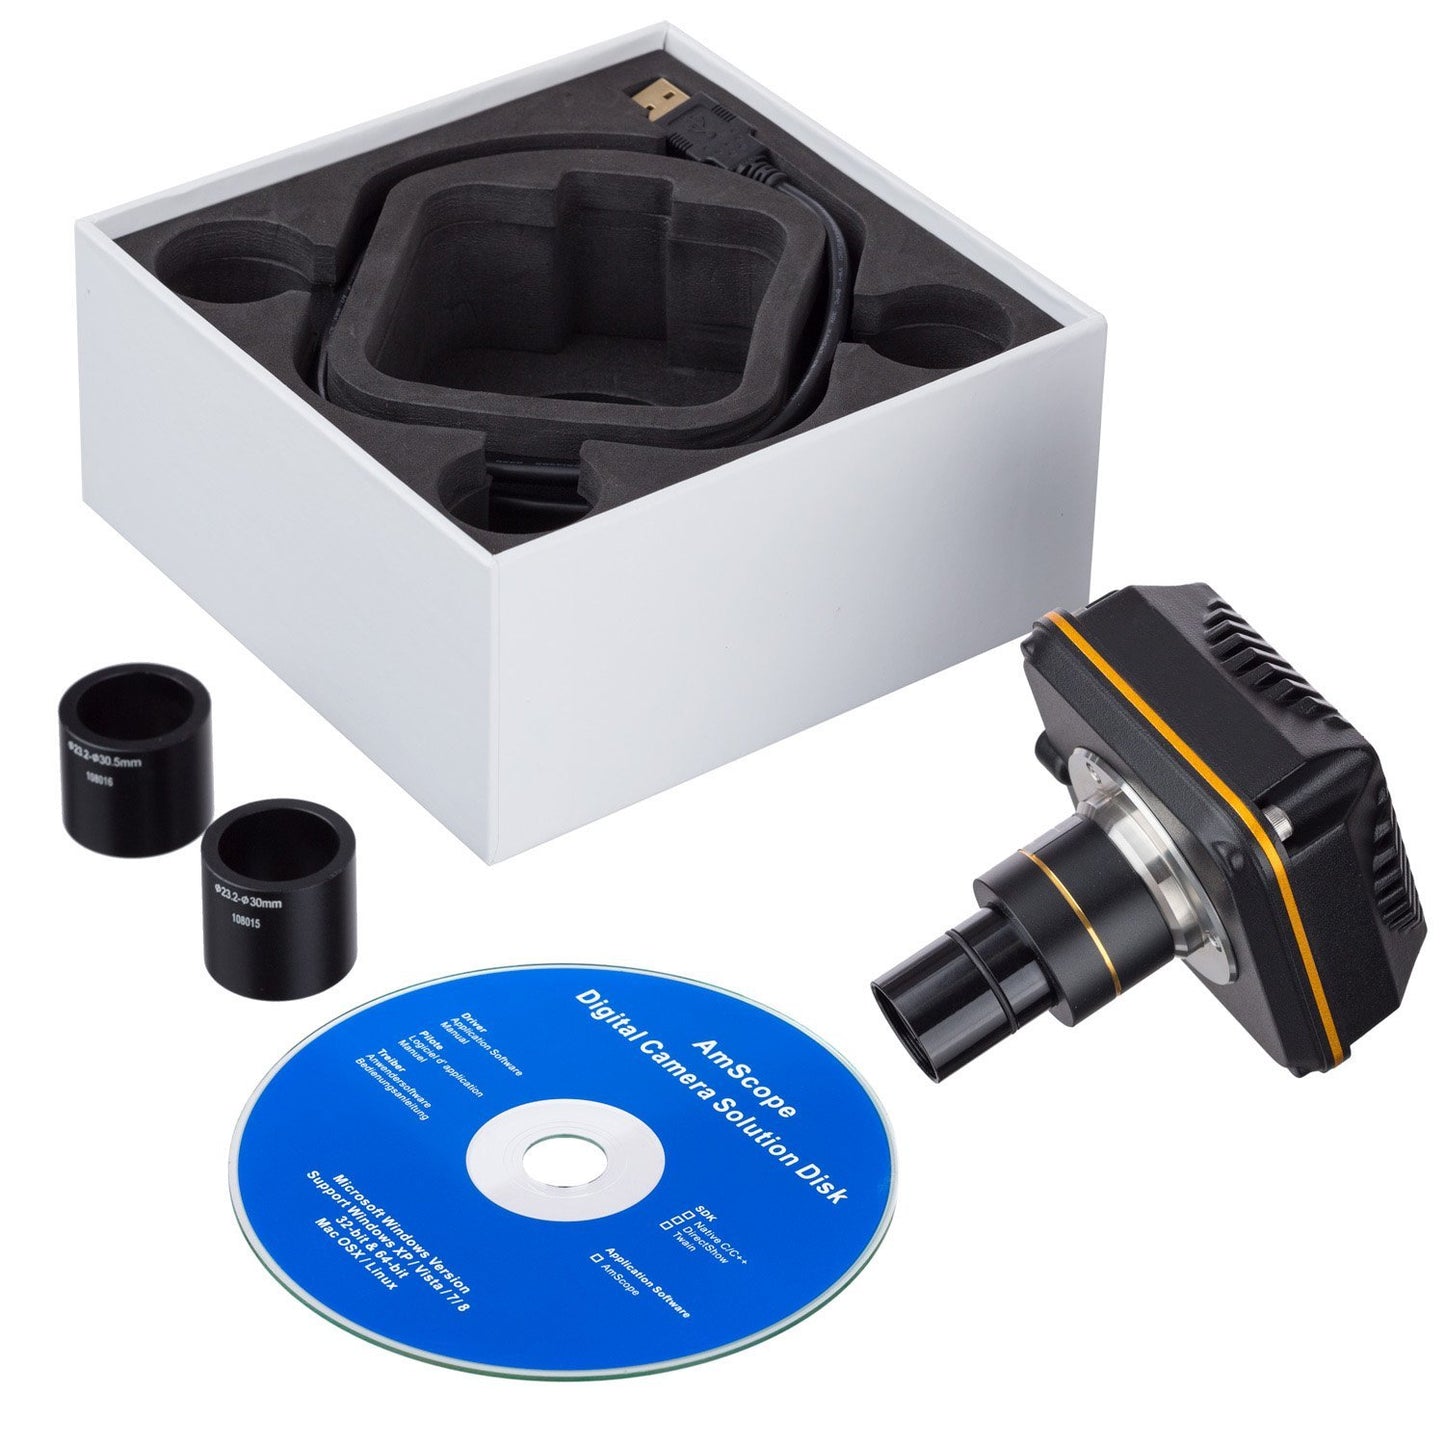 .5MP High-Speed USB 3.0 Digital Microscope Camera